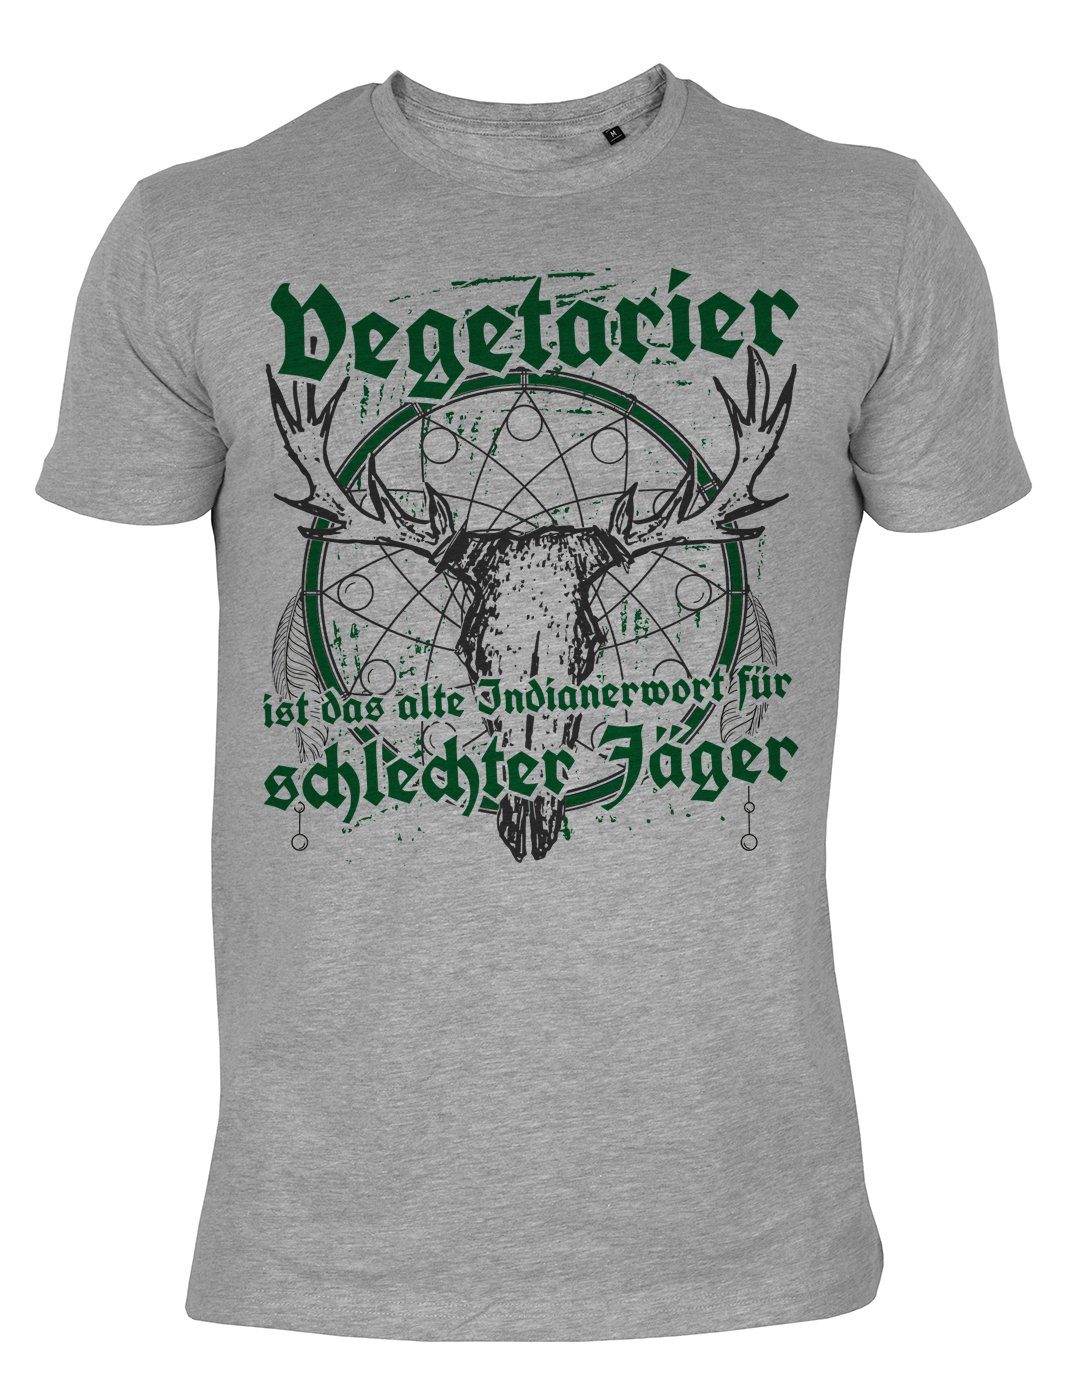 alte Shirt Jäger ist Jäger Tini das ....schlechter Jäger Shirt - Shirt: Sprüche Vegetarier Vegetarier T-Shirt